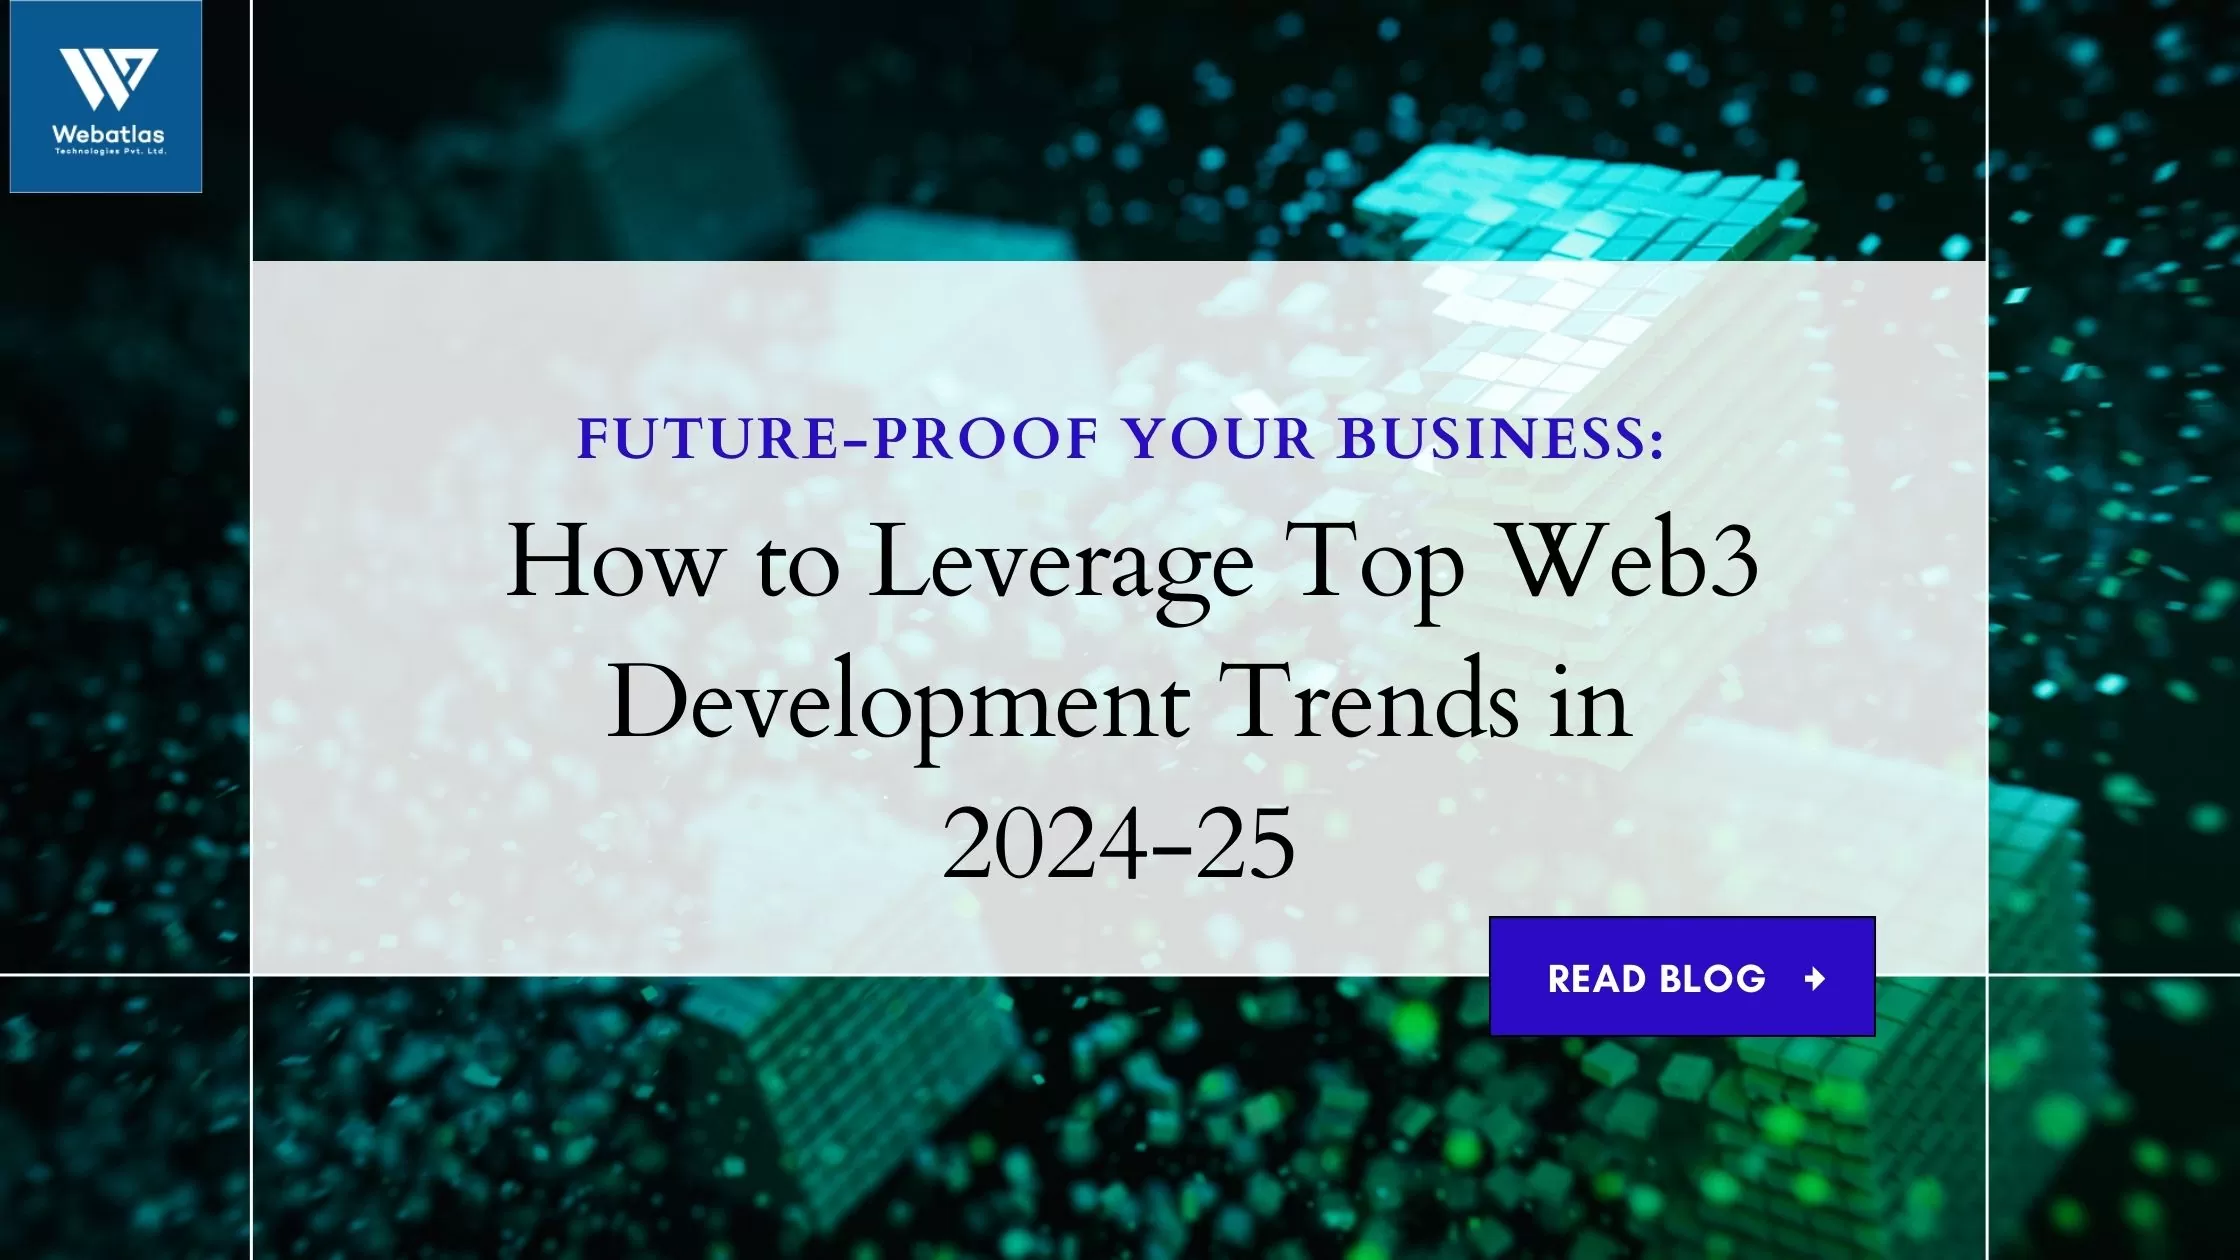 Web3 development trends 2024-25